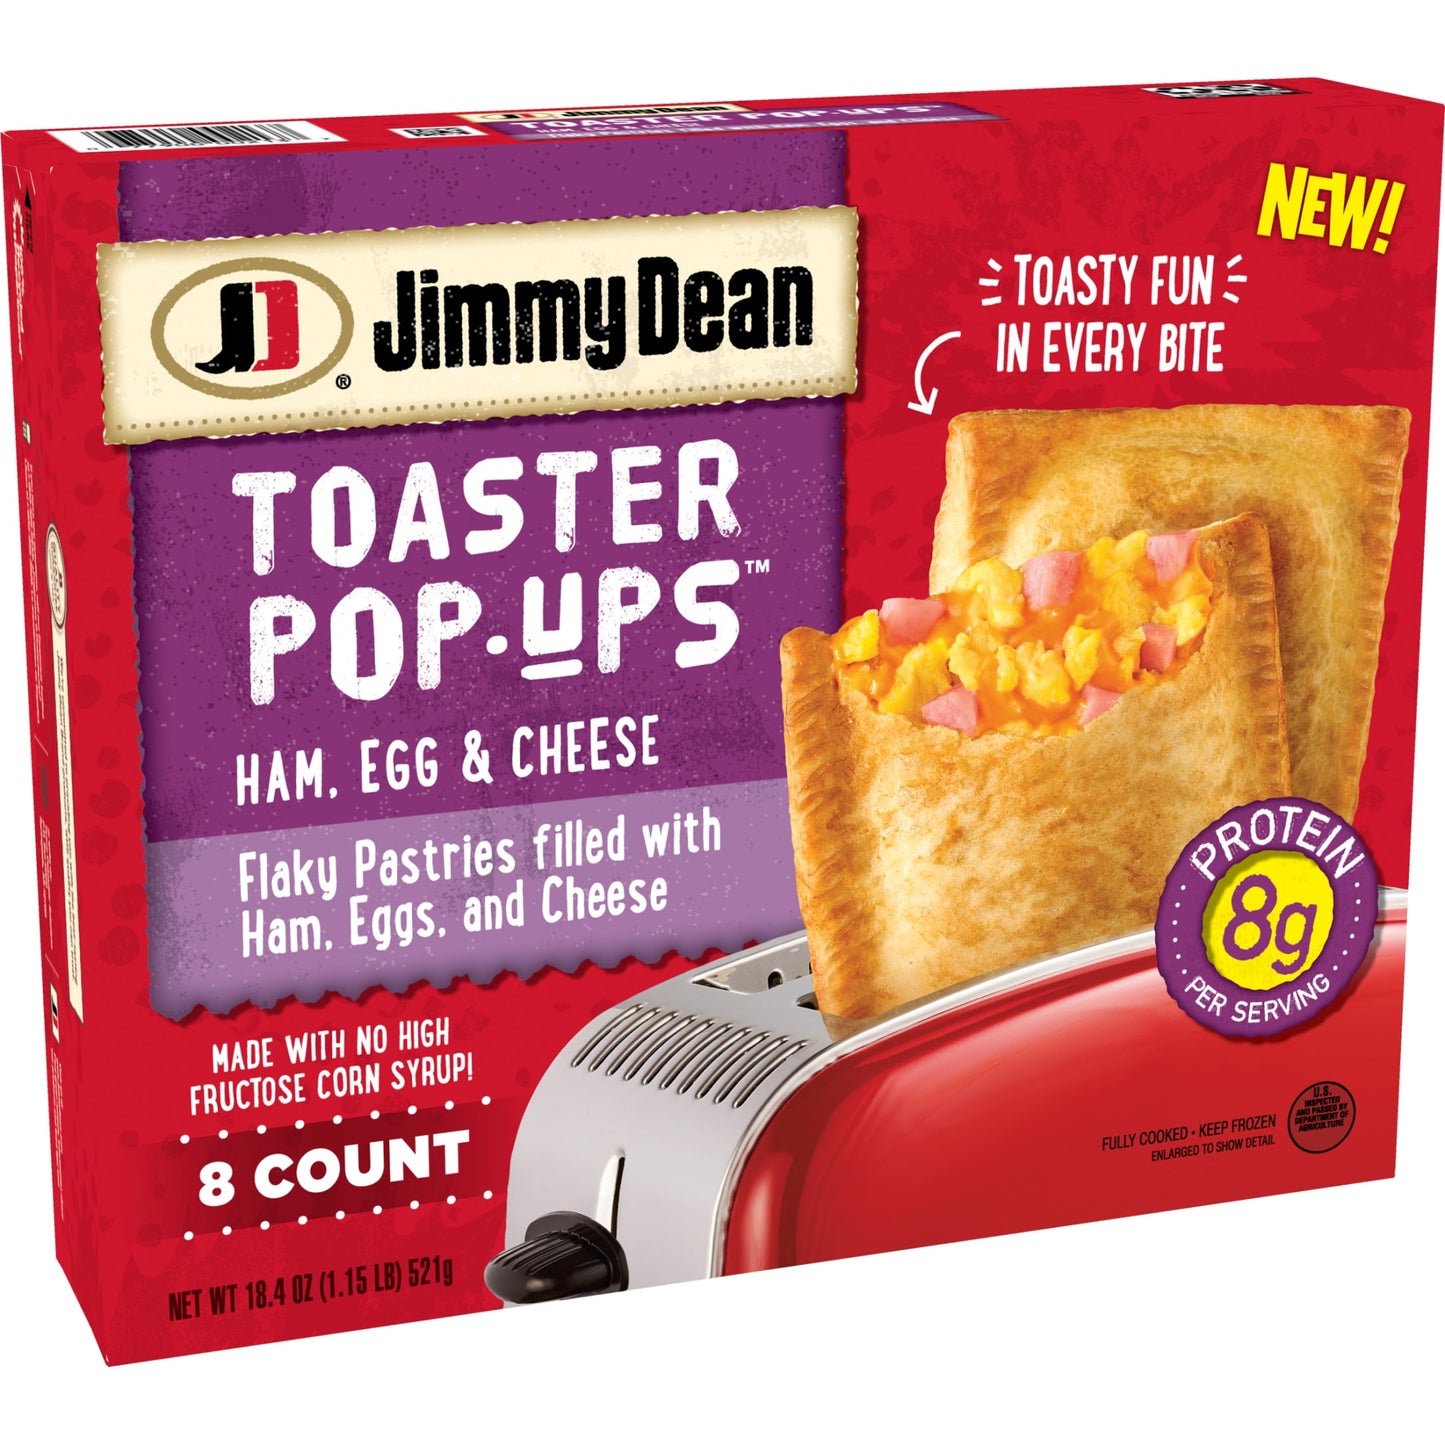 Jimmy Dean, Ham, Egg & Cheese, Toaster Pop-Ups, 18.4 oz, 8 Count (Frozen)